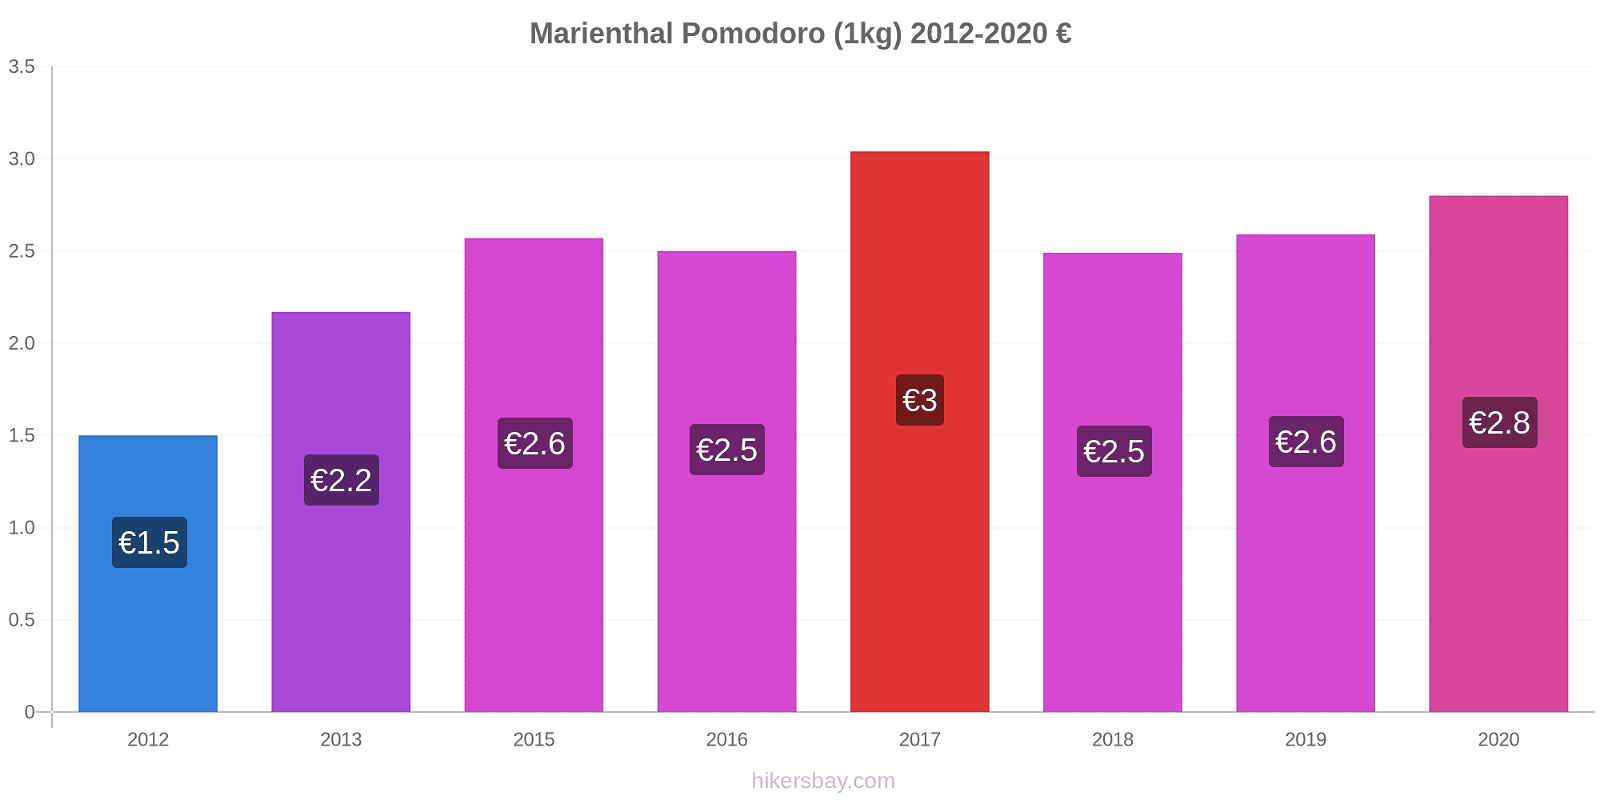 Marienthal variazioni di prezzo Pomodoro (1kg) hikersbay.com